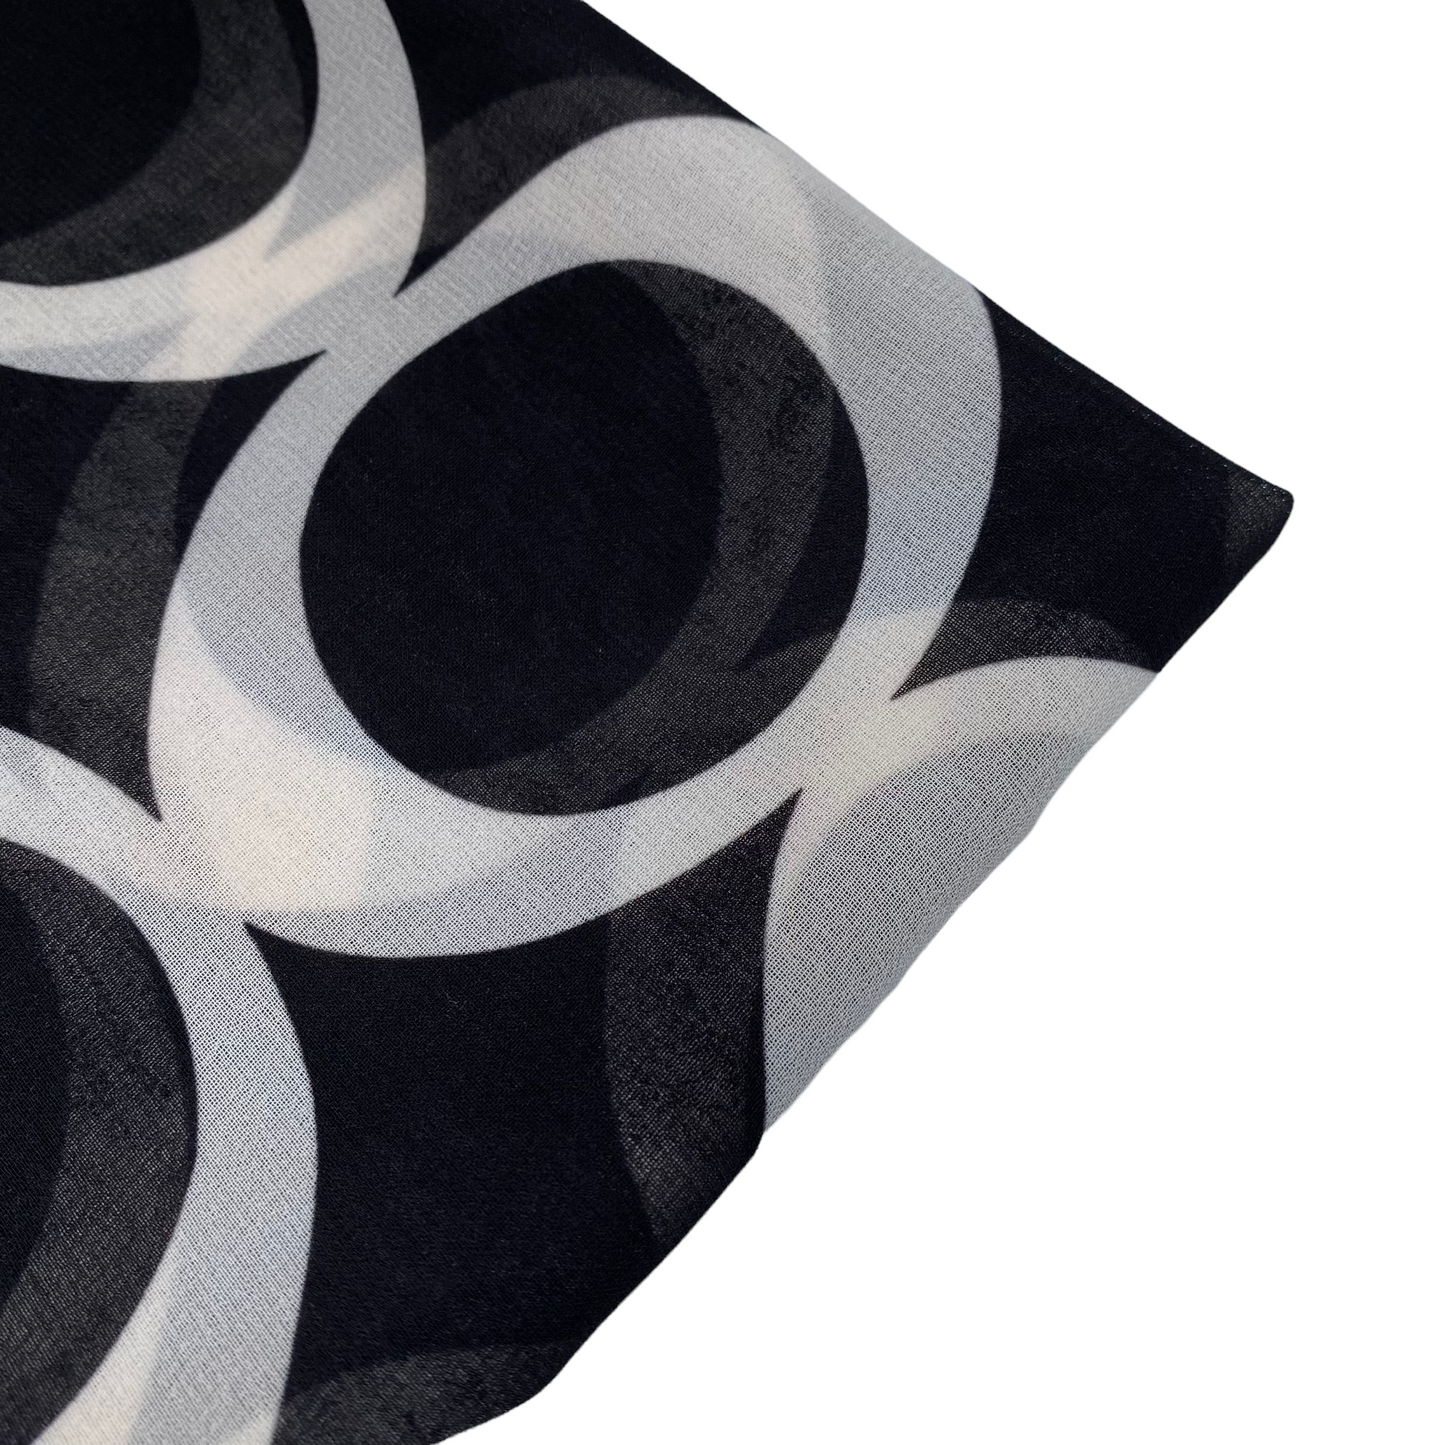 Printed Polyester Chiffon - Circles - Black/White